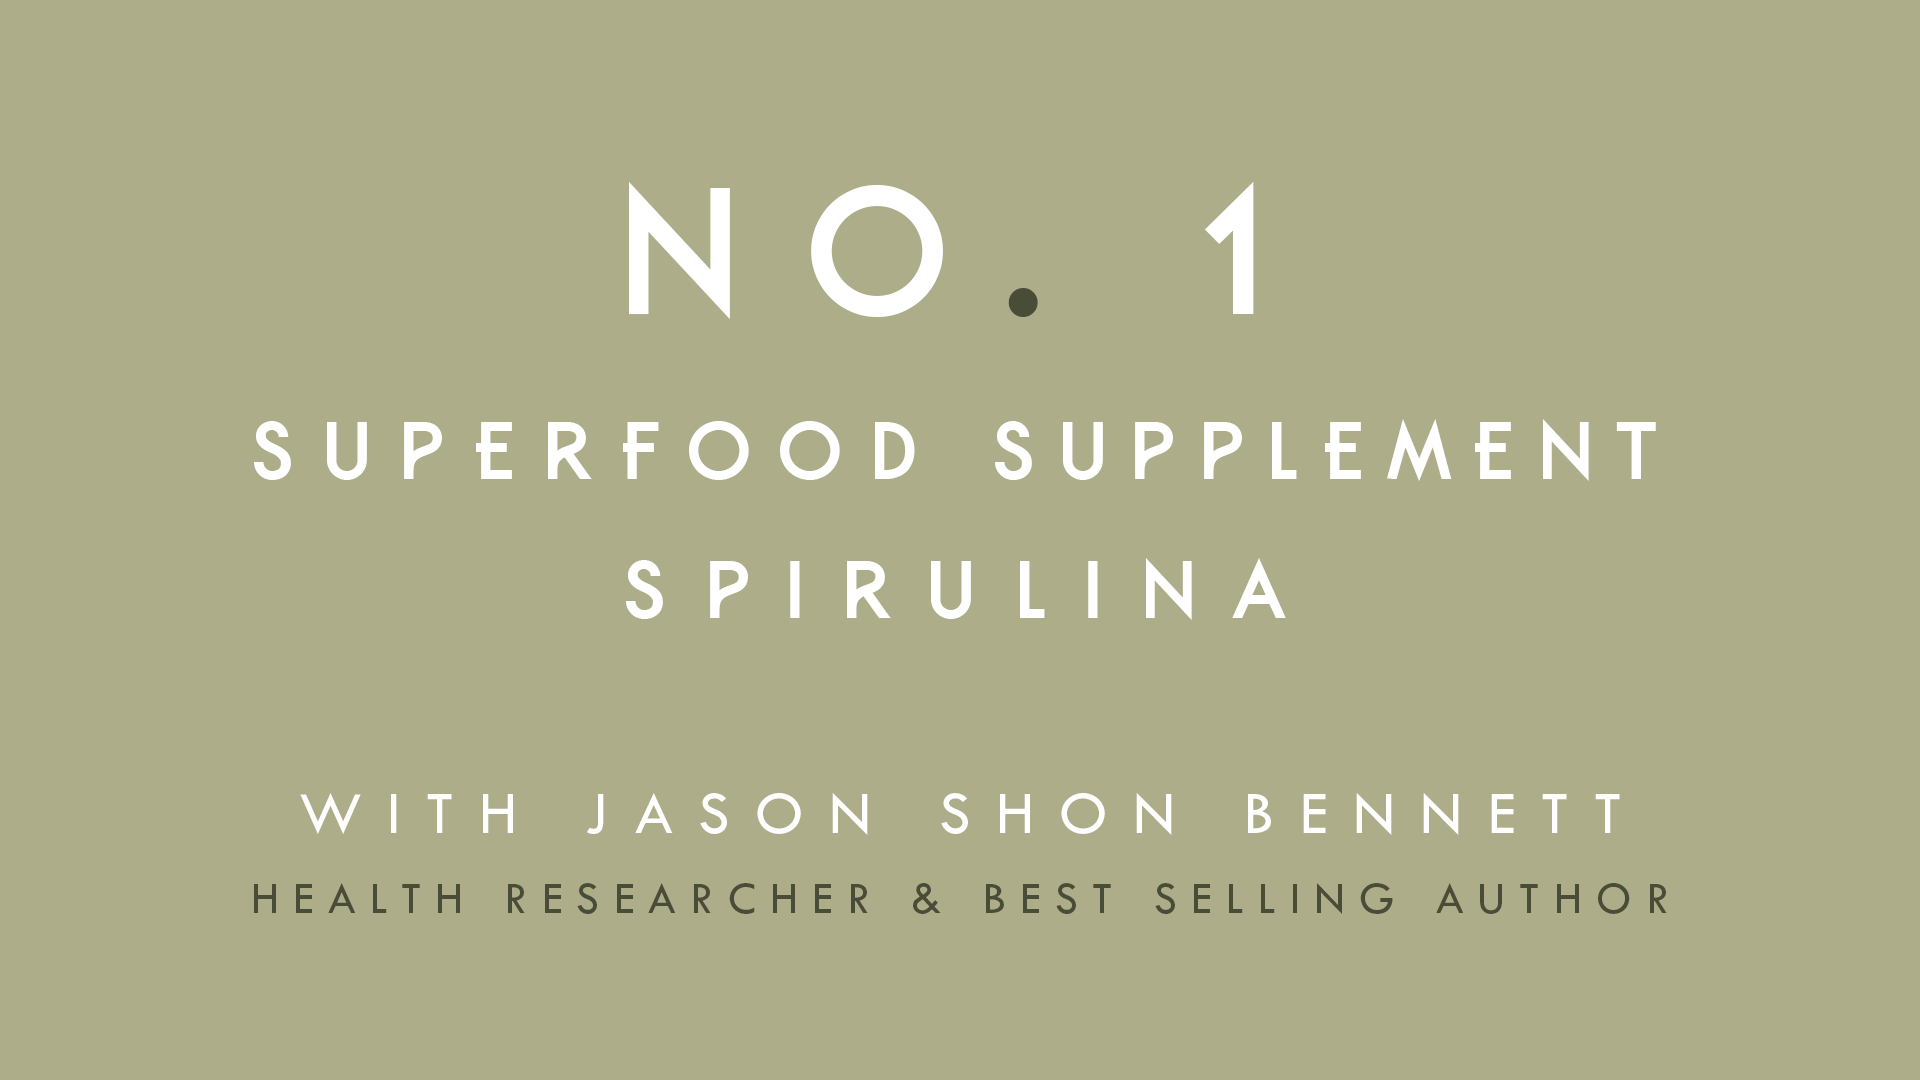 'Why VITUS Spirulina' with Jason Shon Bennett - Continued